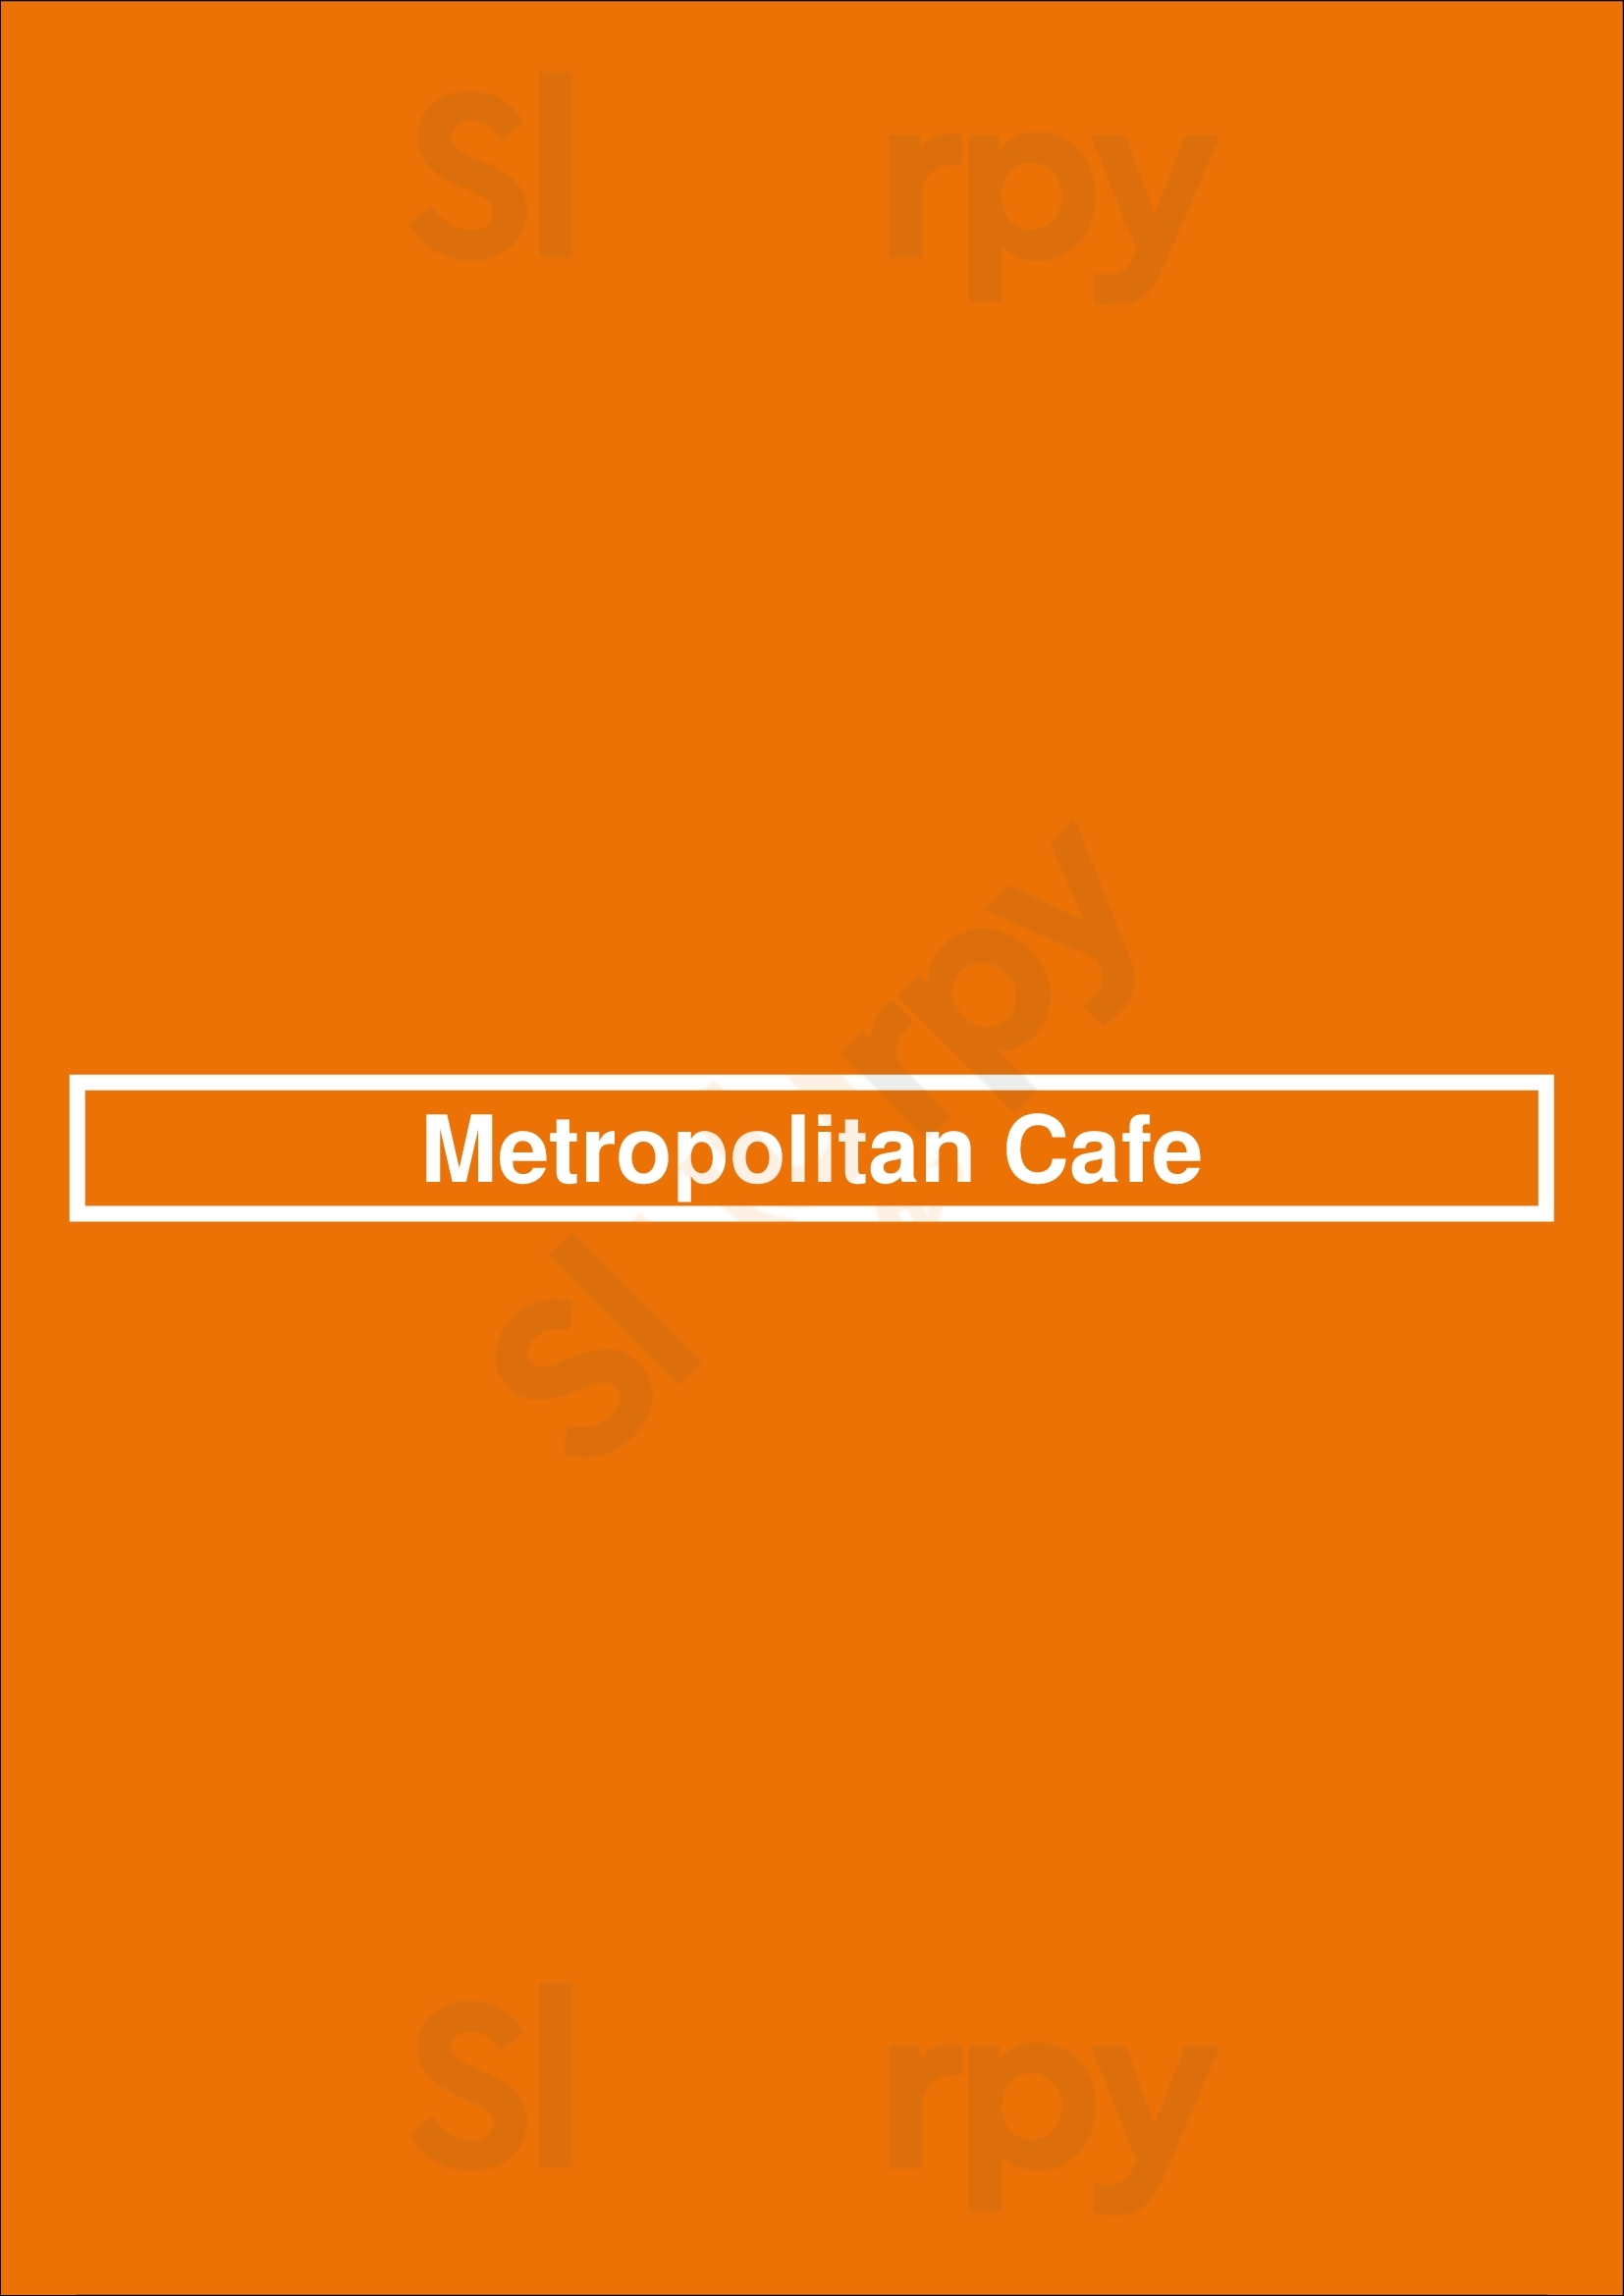 Metropolitan Cafe Barcelona Menu - 1